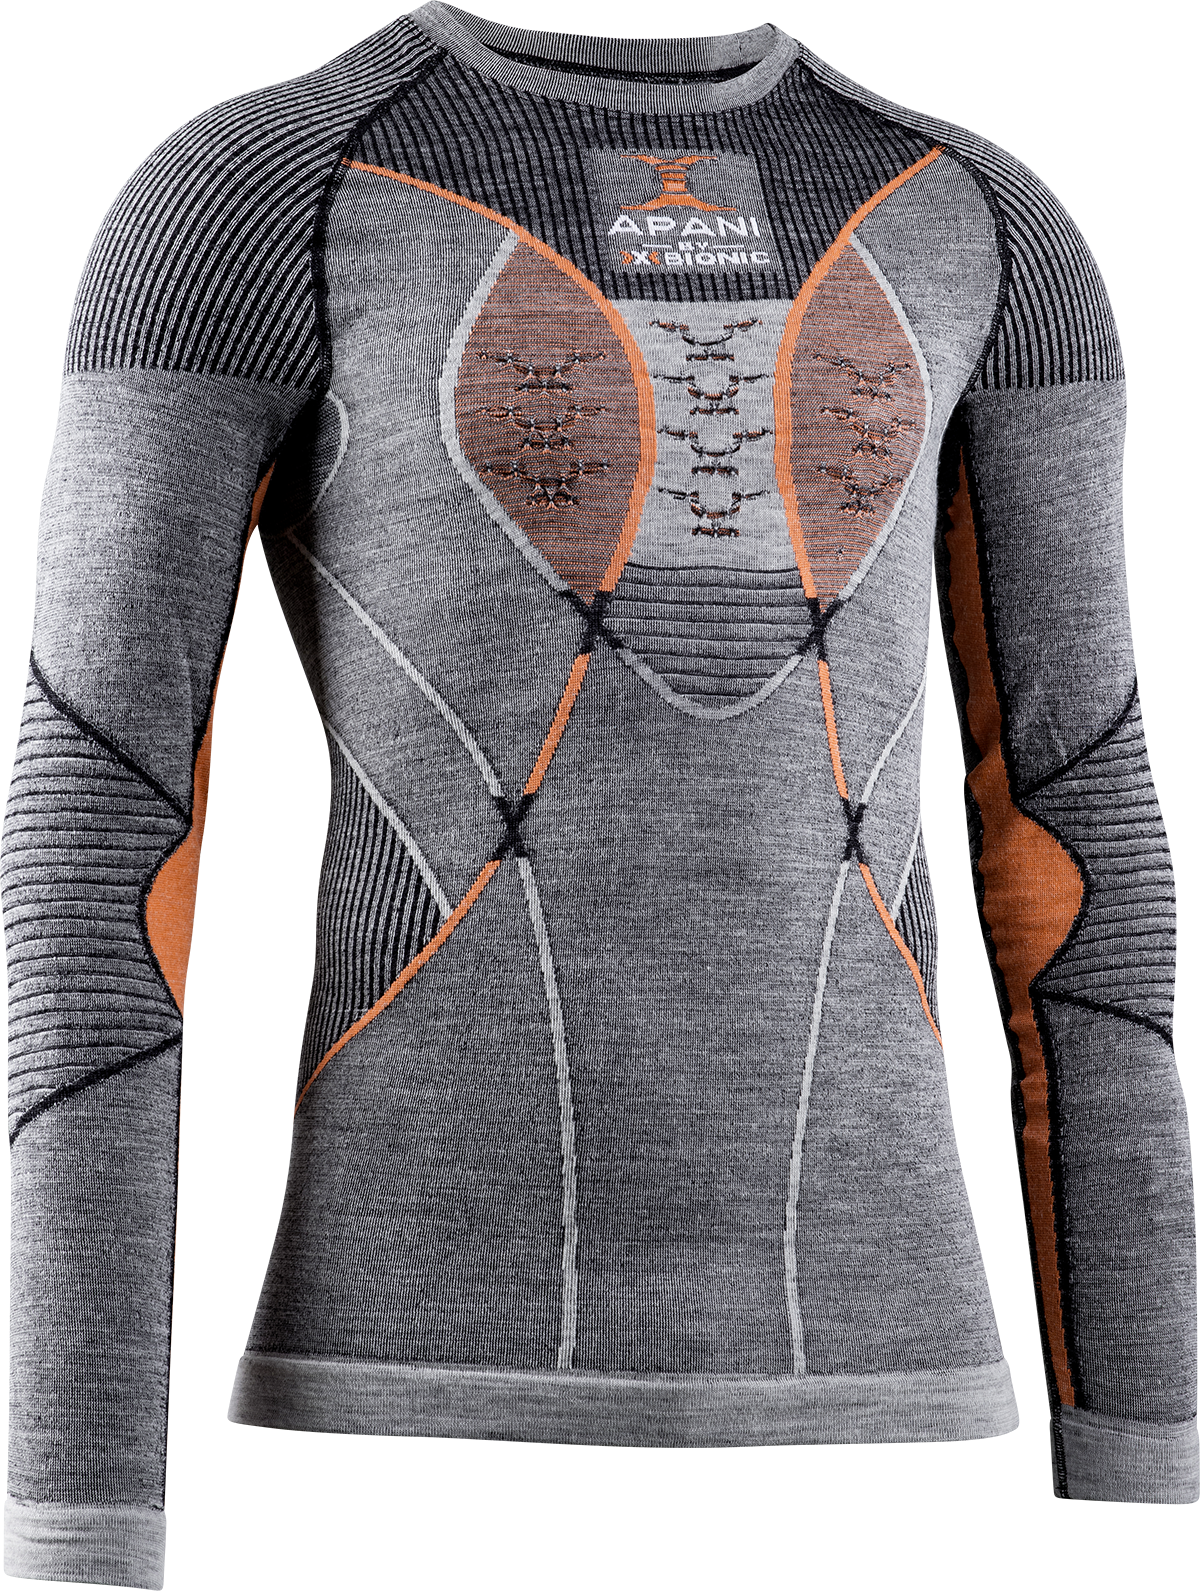 Tričko X-Bionic Apani 4.0 Merino Shirt Round Neck LG SL M - čierna/sivá/oranžová